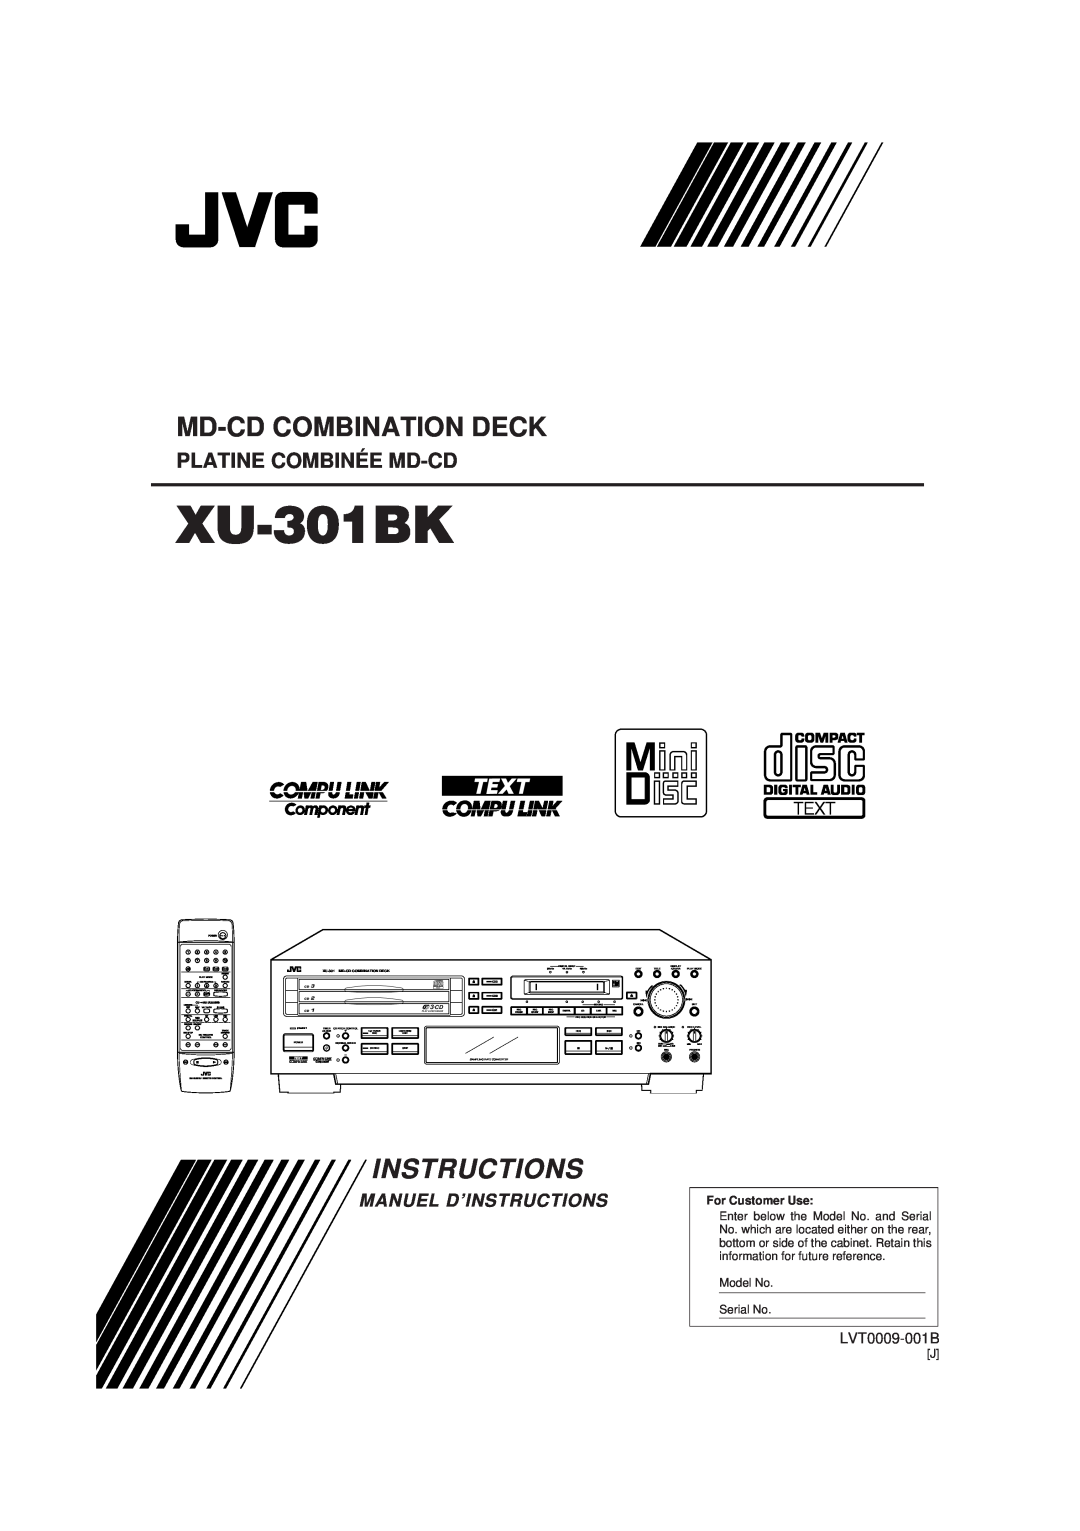 JVC XU-301BK manual Md-Cdcombination Deck, Platine Combinée Md-Cd, Manuel D’Instructions, LVT0009-001B, For Customer Use 